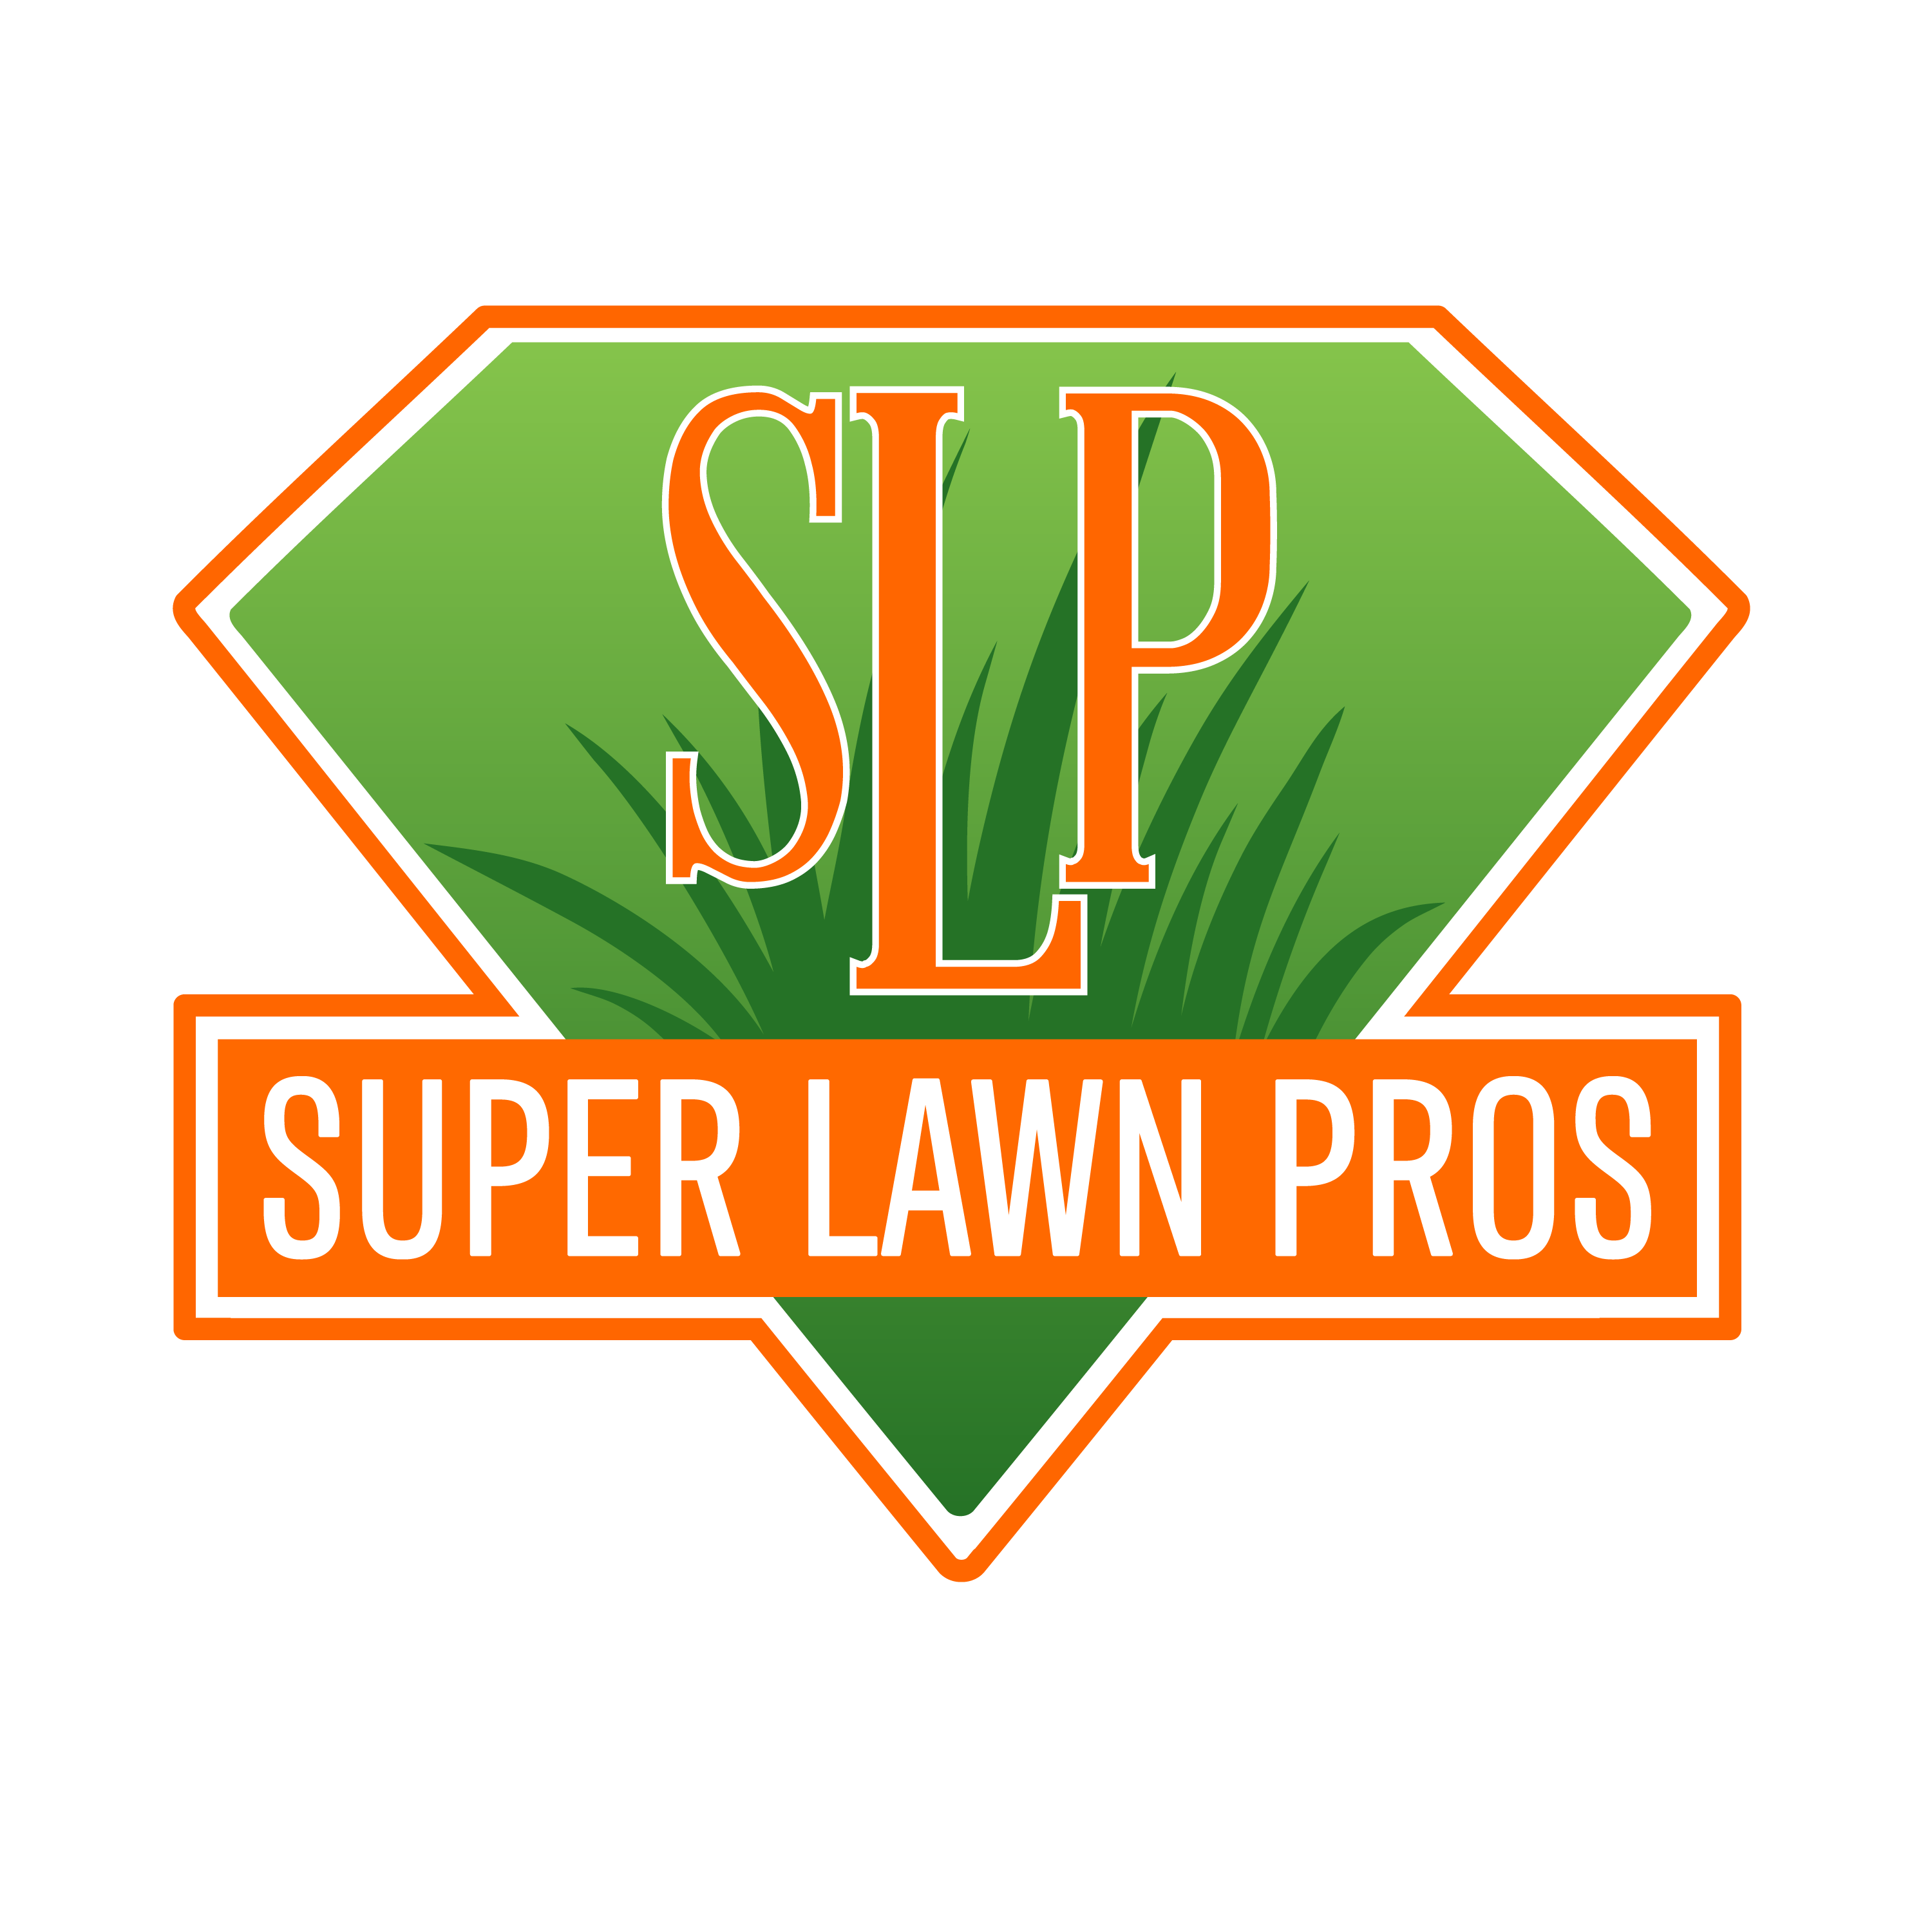 Super Lawn Pros